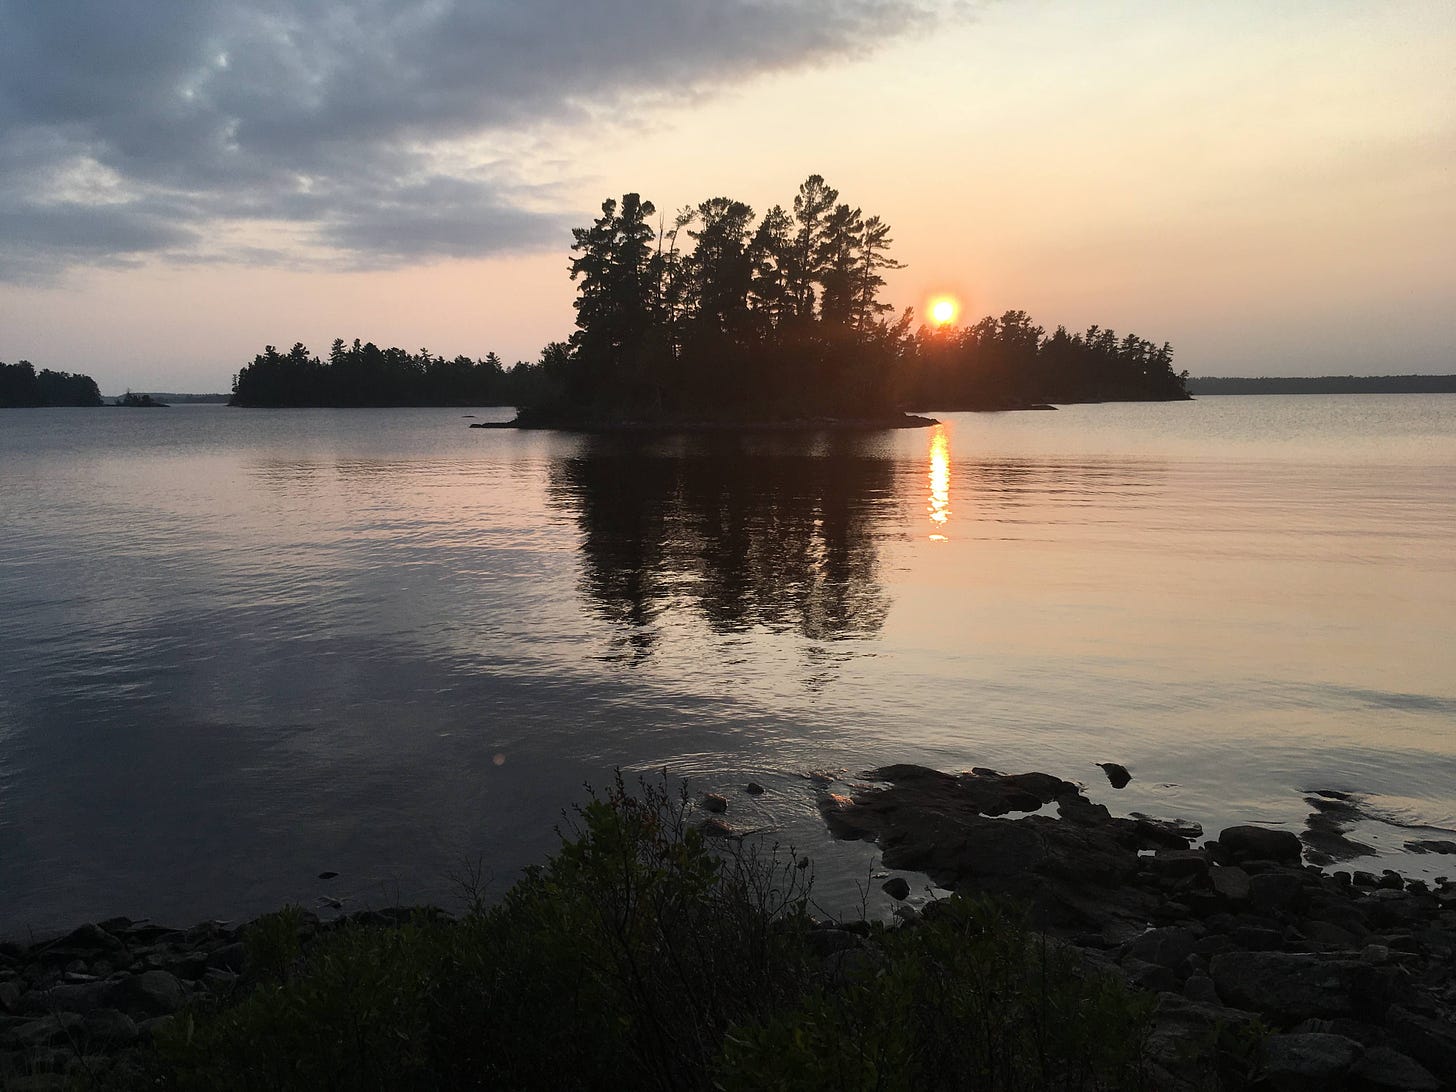 Sunset over a lake island